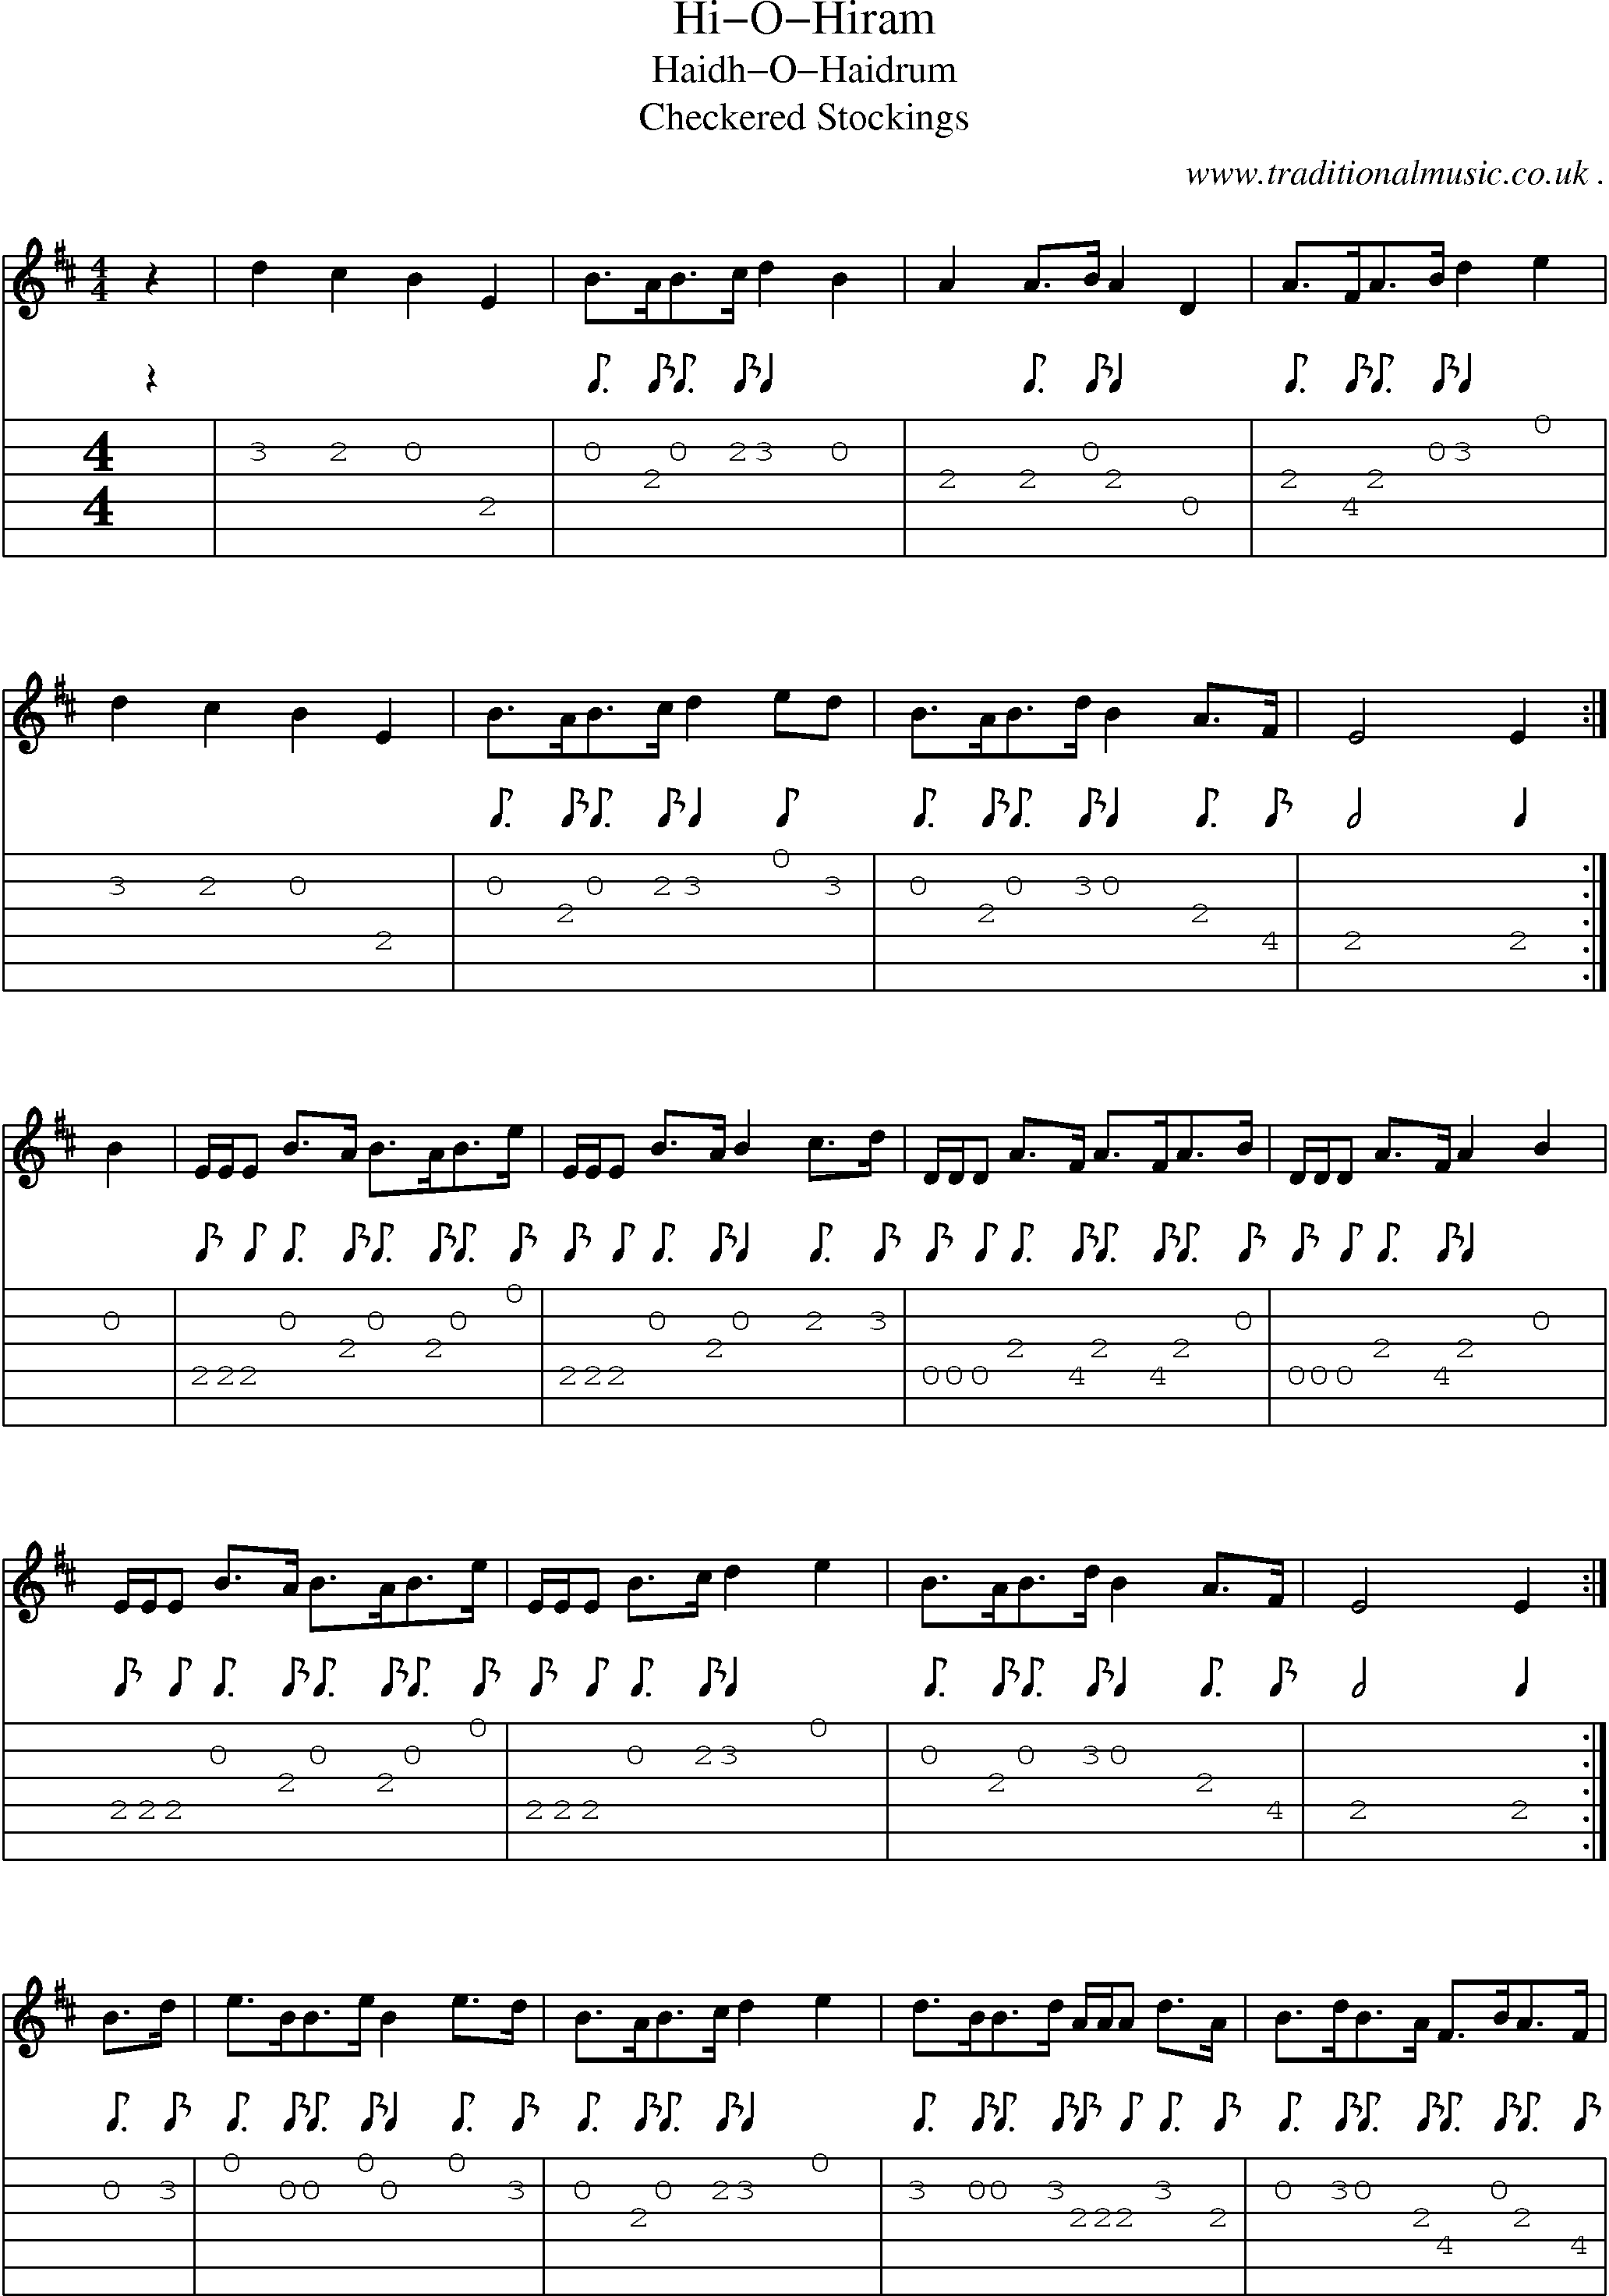 Sheet-music  score, Chords and Guitar Tabs for Hi-o-hiram